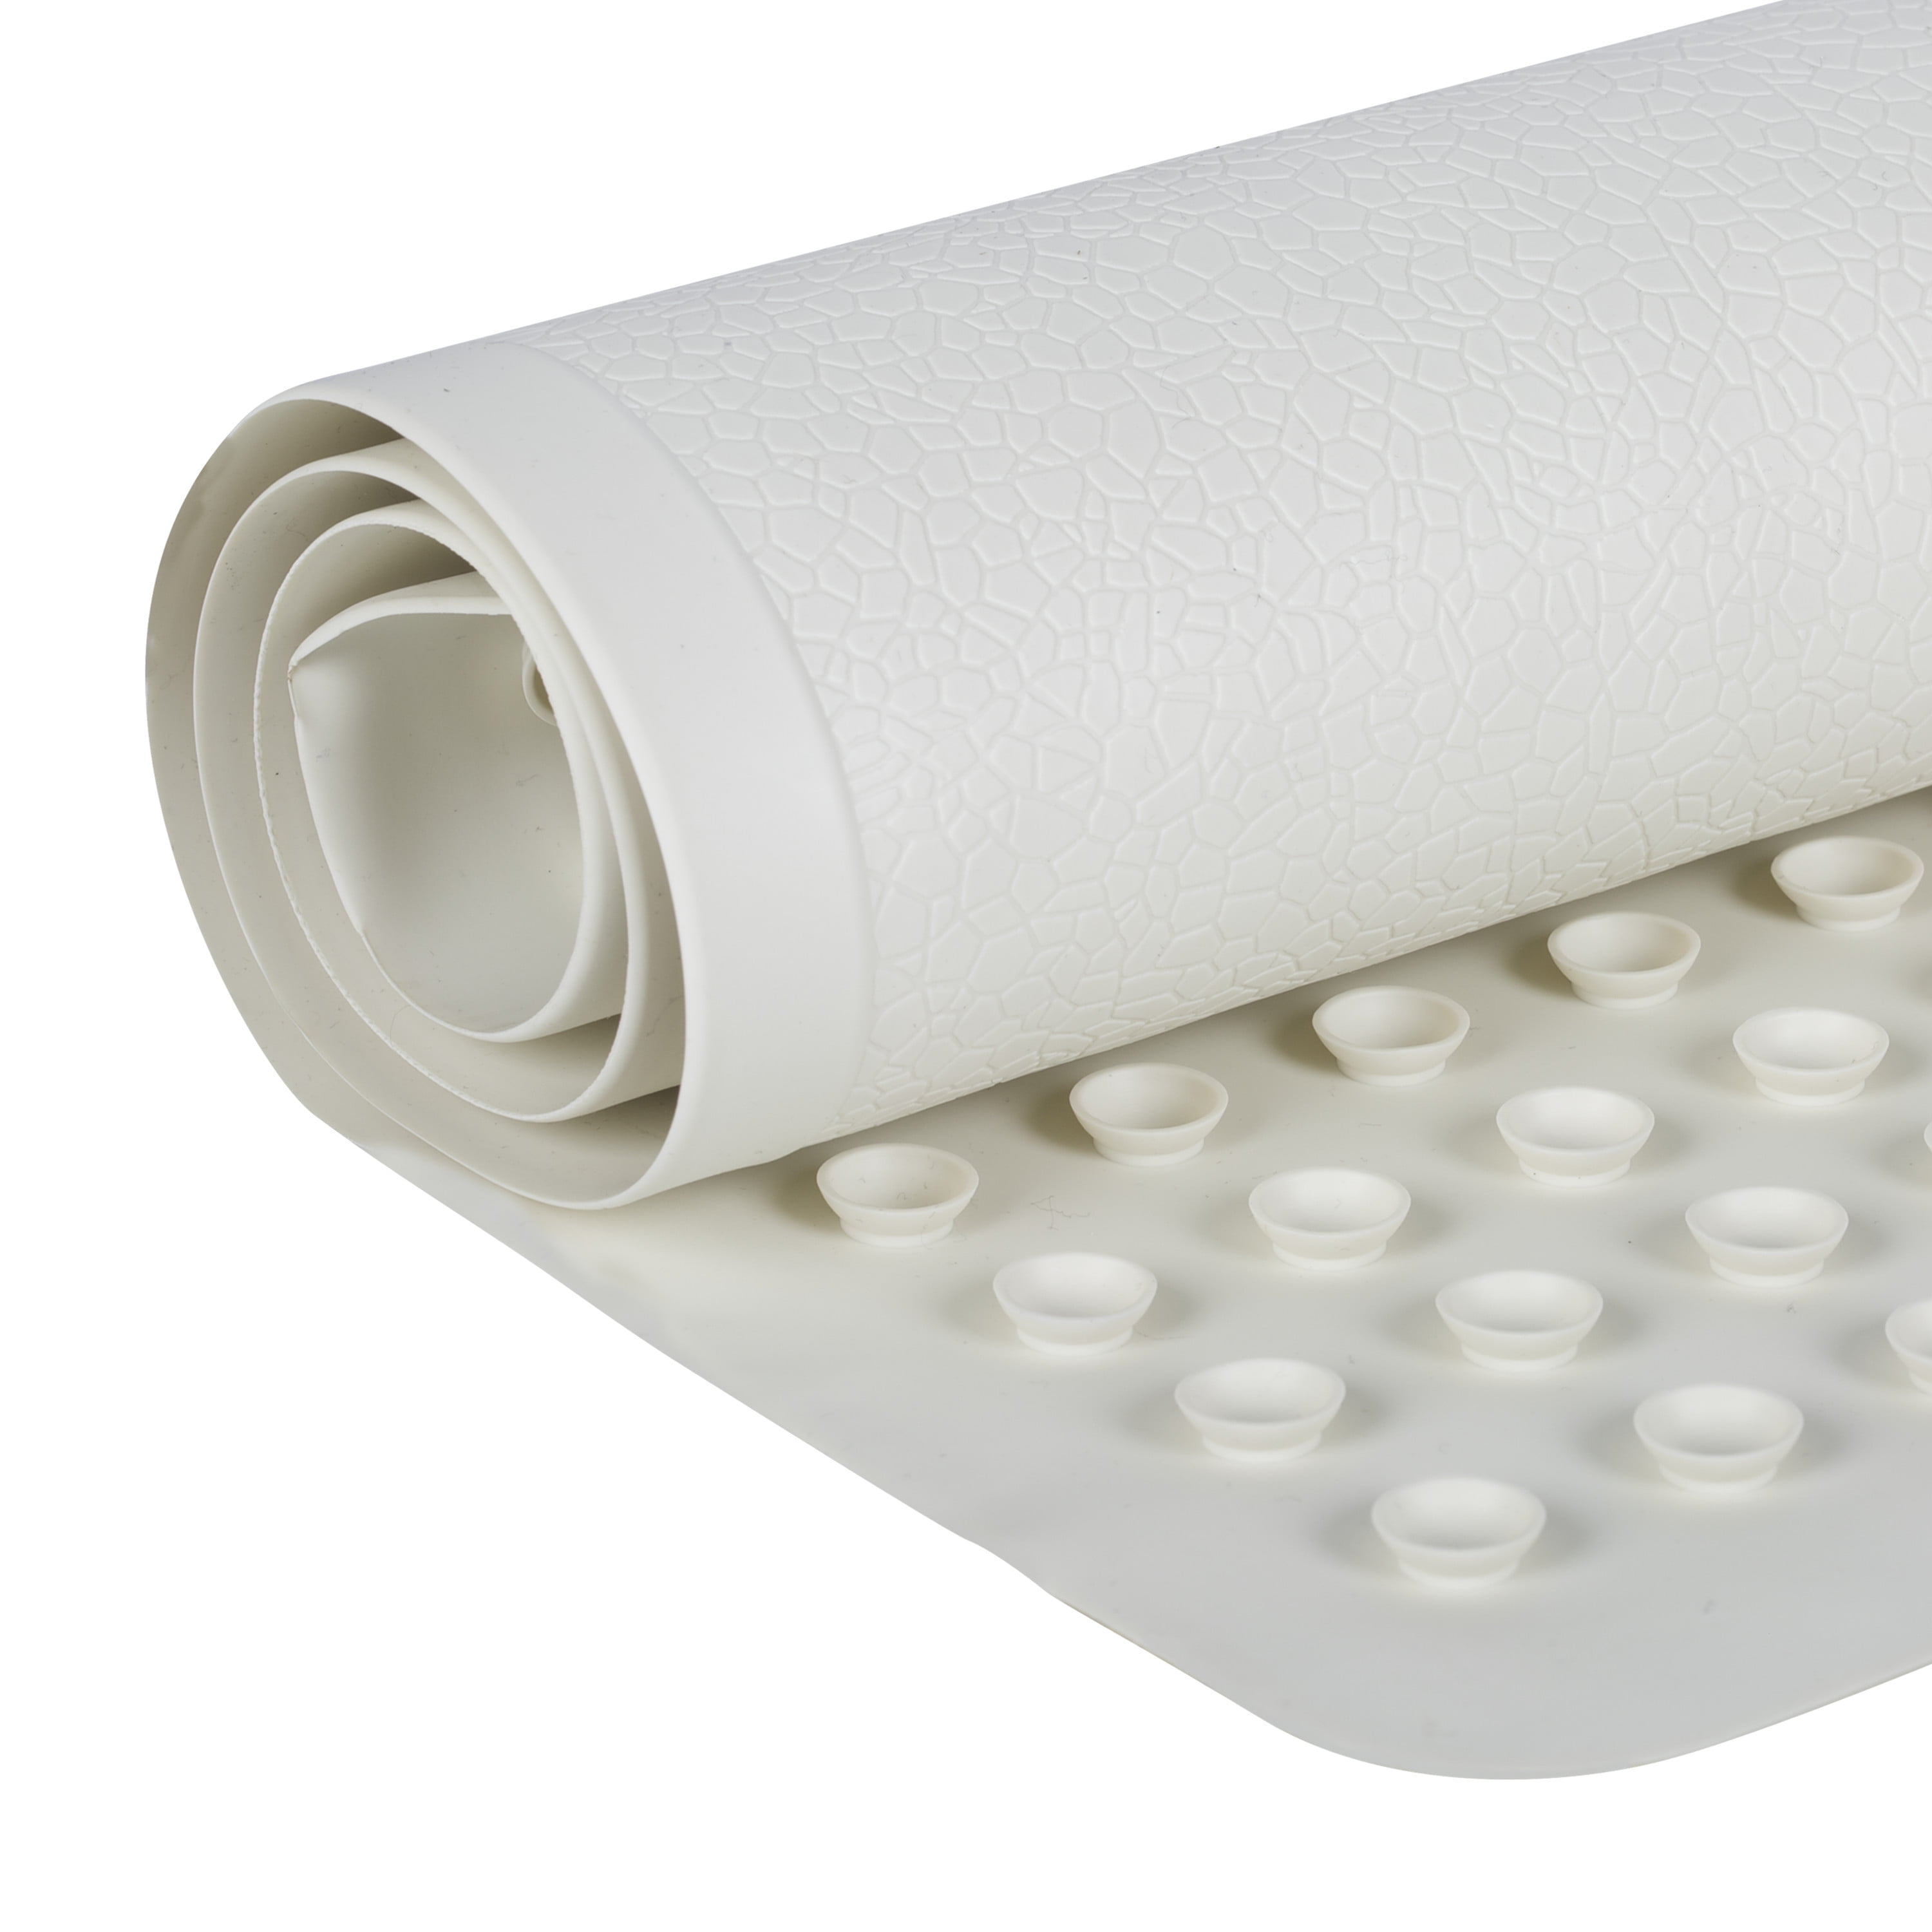 M Moda at Home Enterprises Ltd. Harlequin Tub Mat 100% Natural Rubber 15.75 in. x 27.5 in., White